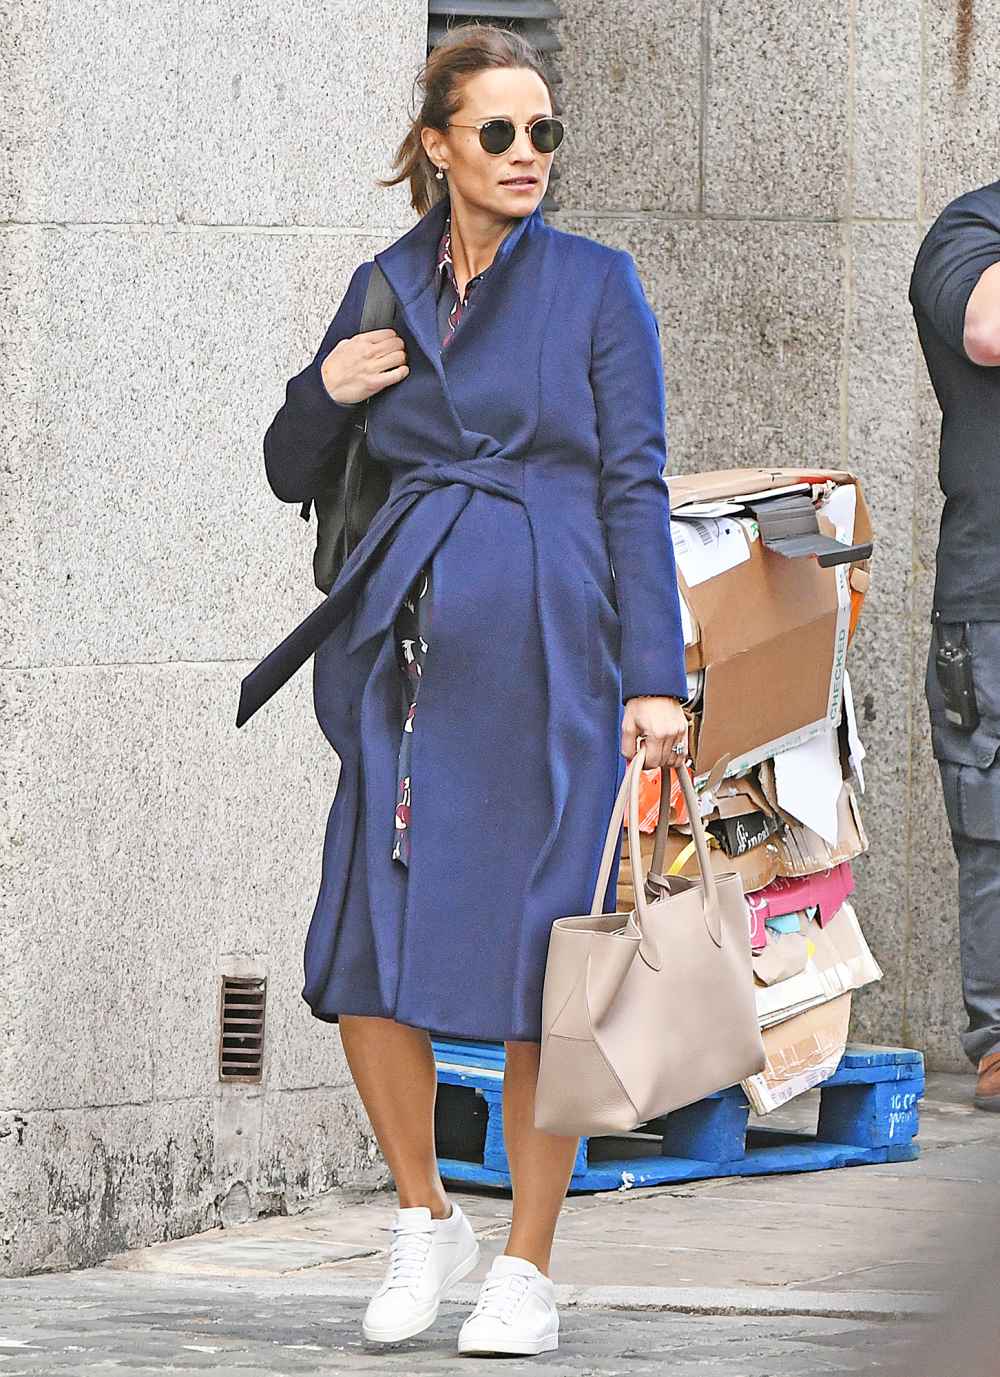 Pippa Middleton Is A London Bag Lady